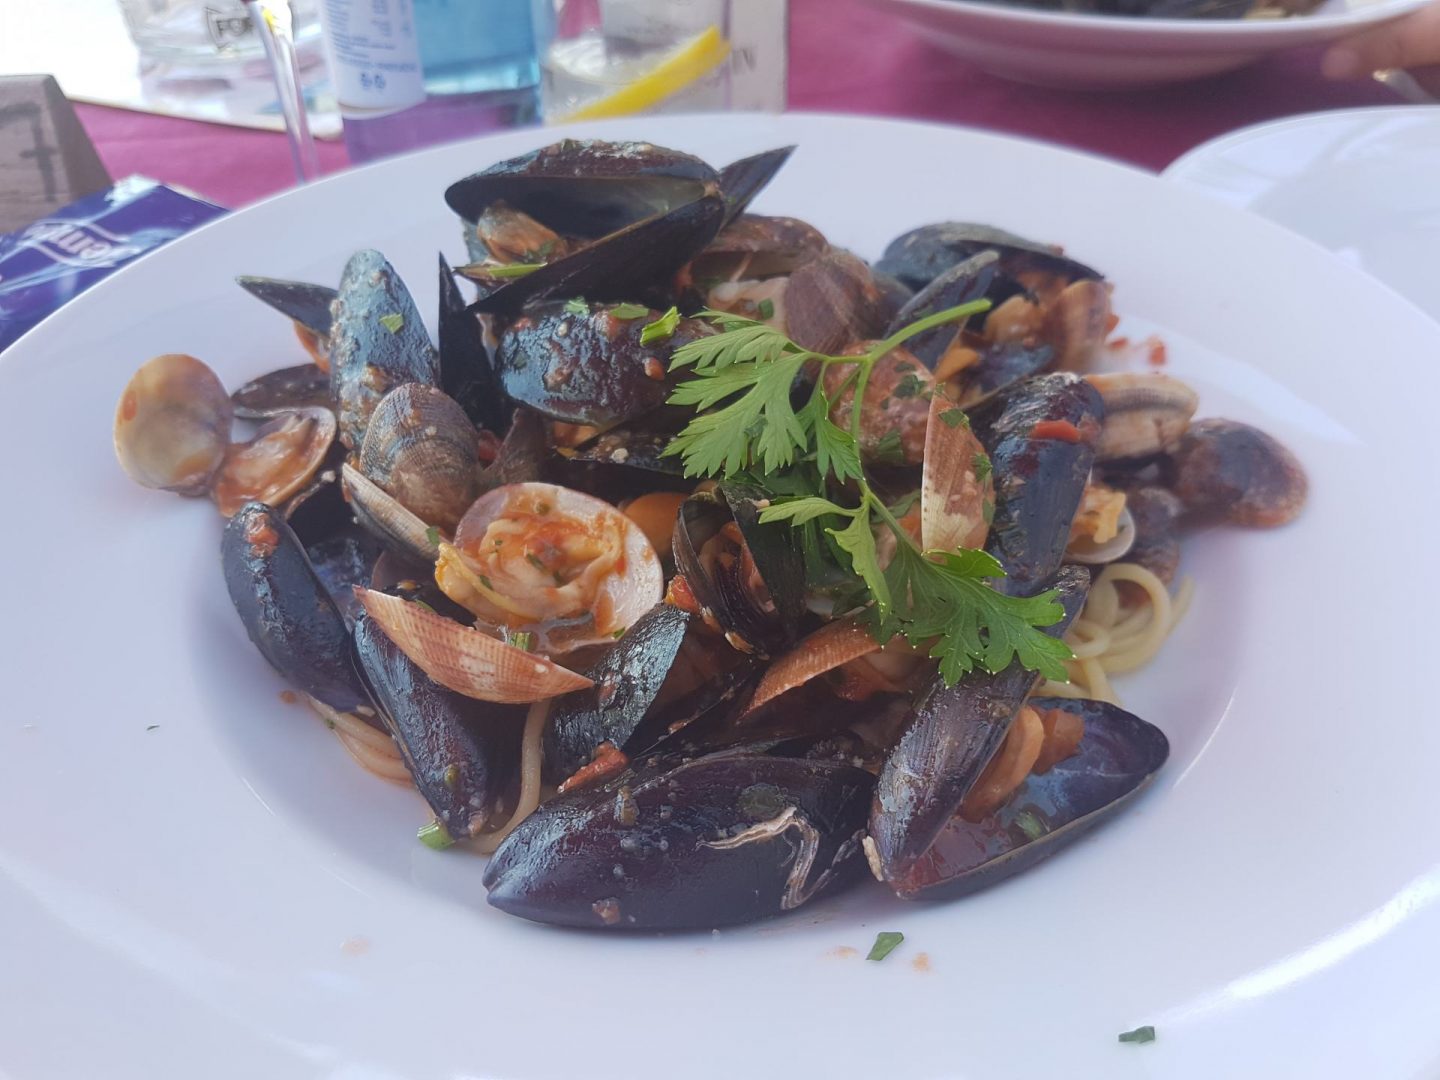 Erfahrung Bewertung Kritik Restaurant Lido am Kalterer See Spaghetti mit Muscheln Foodblog Sternestulle